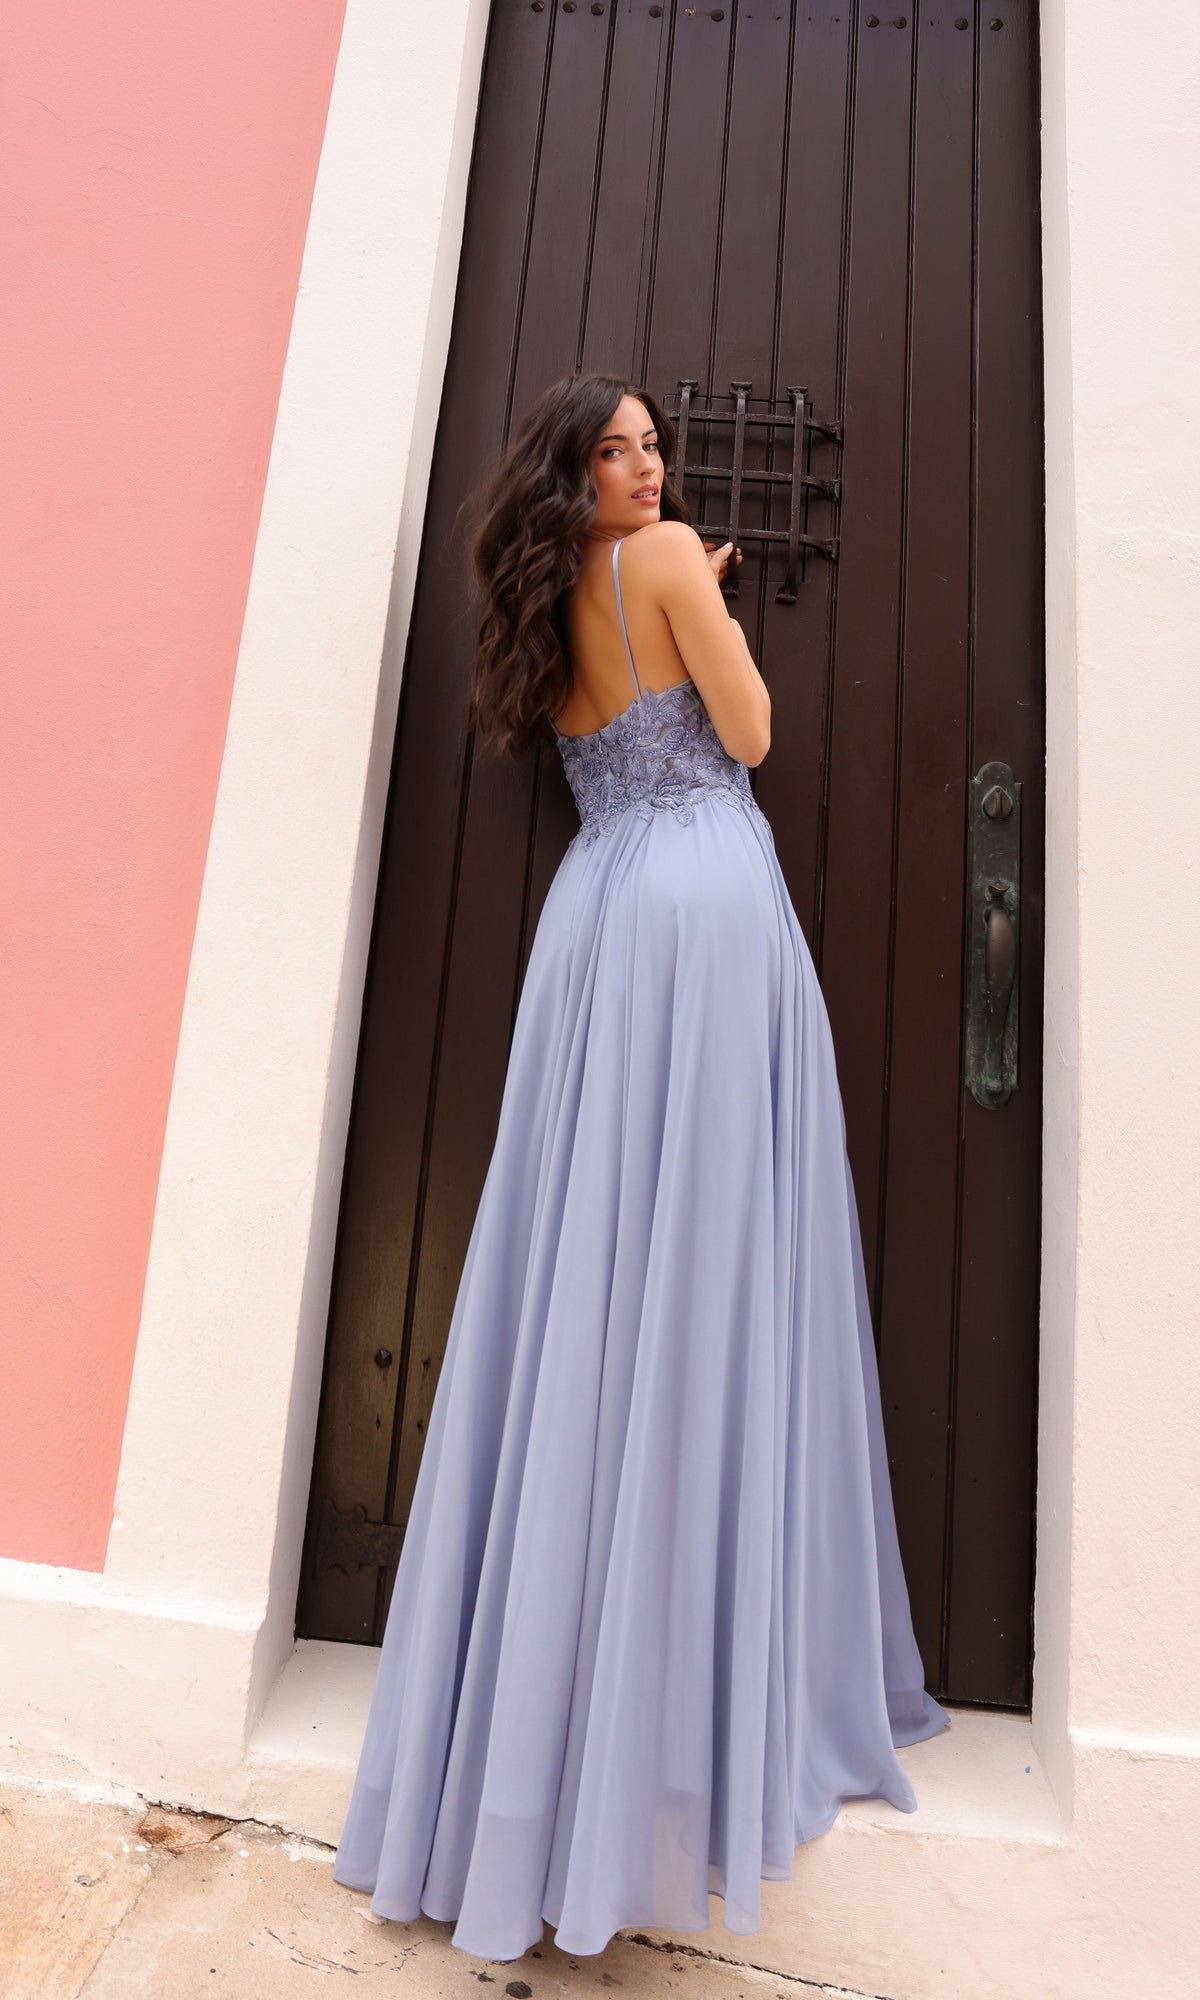  Formal Long Dress C1462 By Nox Anabel